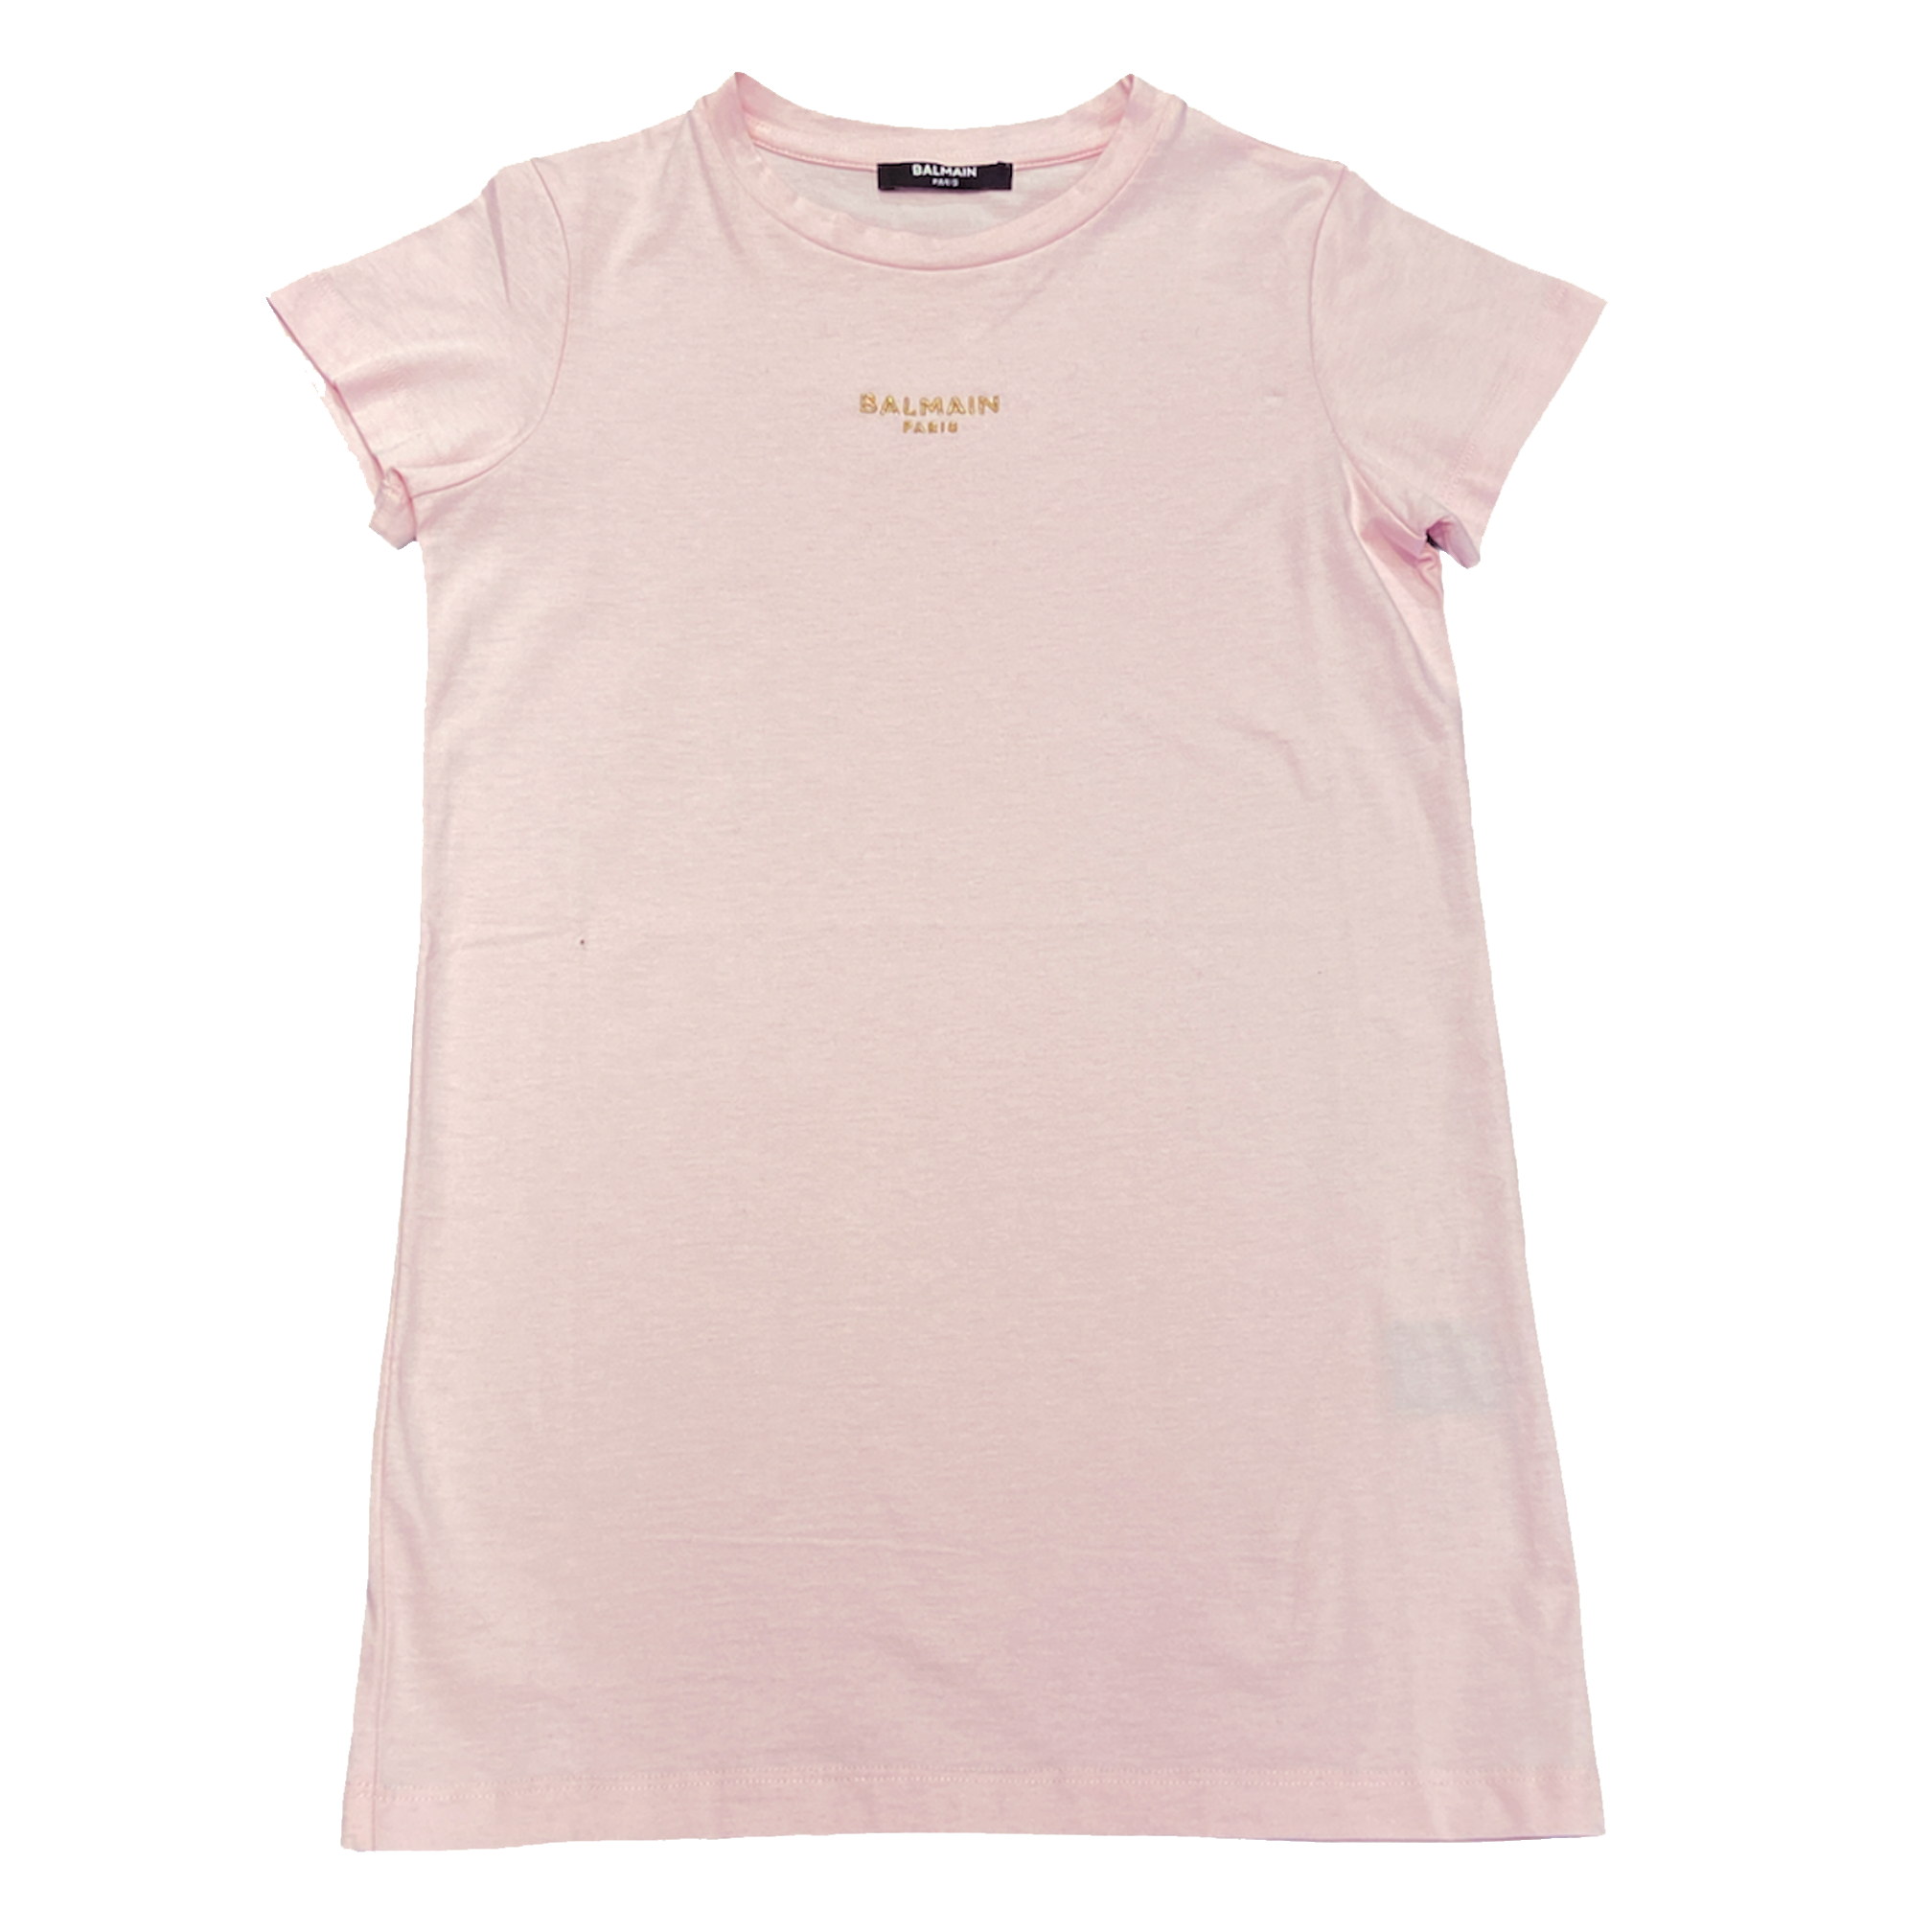 Balmain Pink T-Shirt Dress